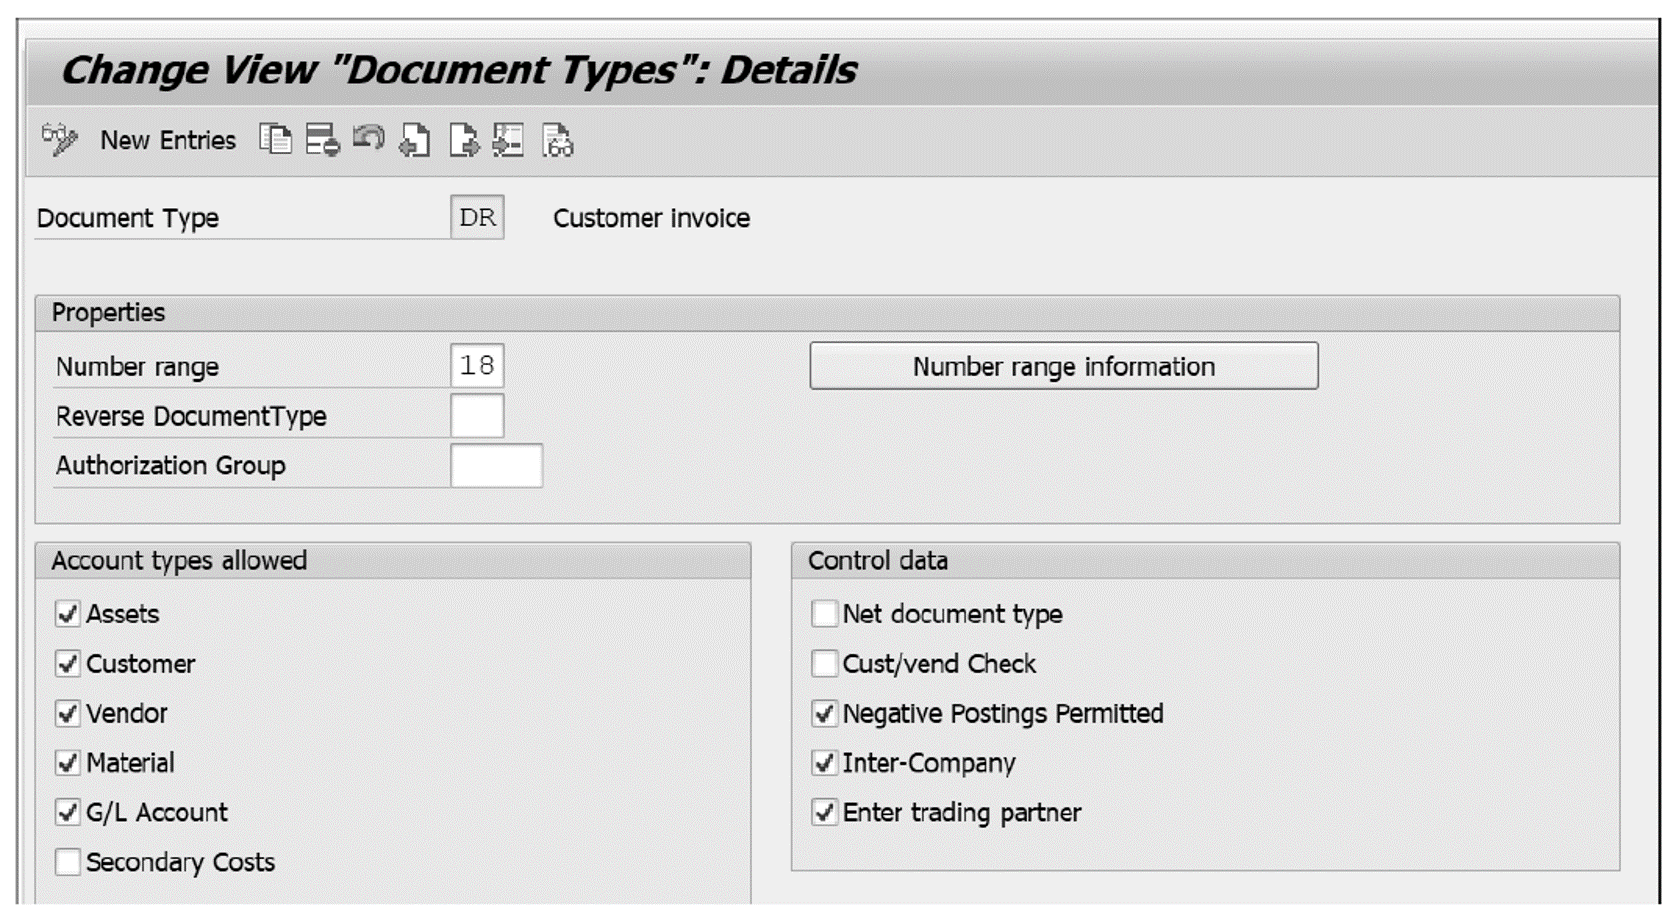 Document Type DR: Configuration